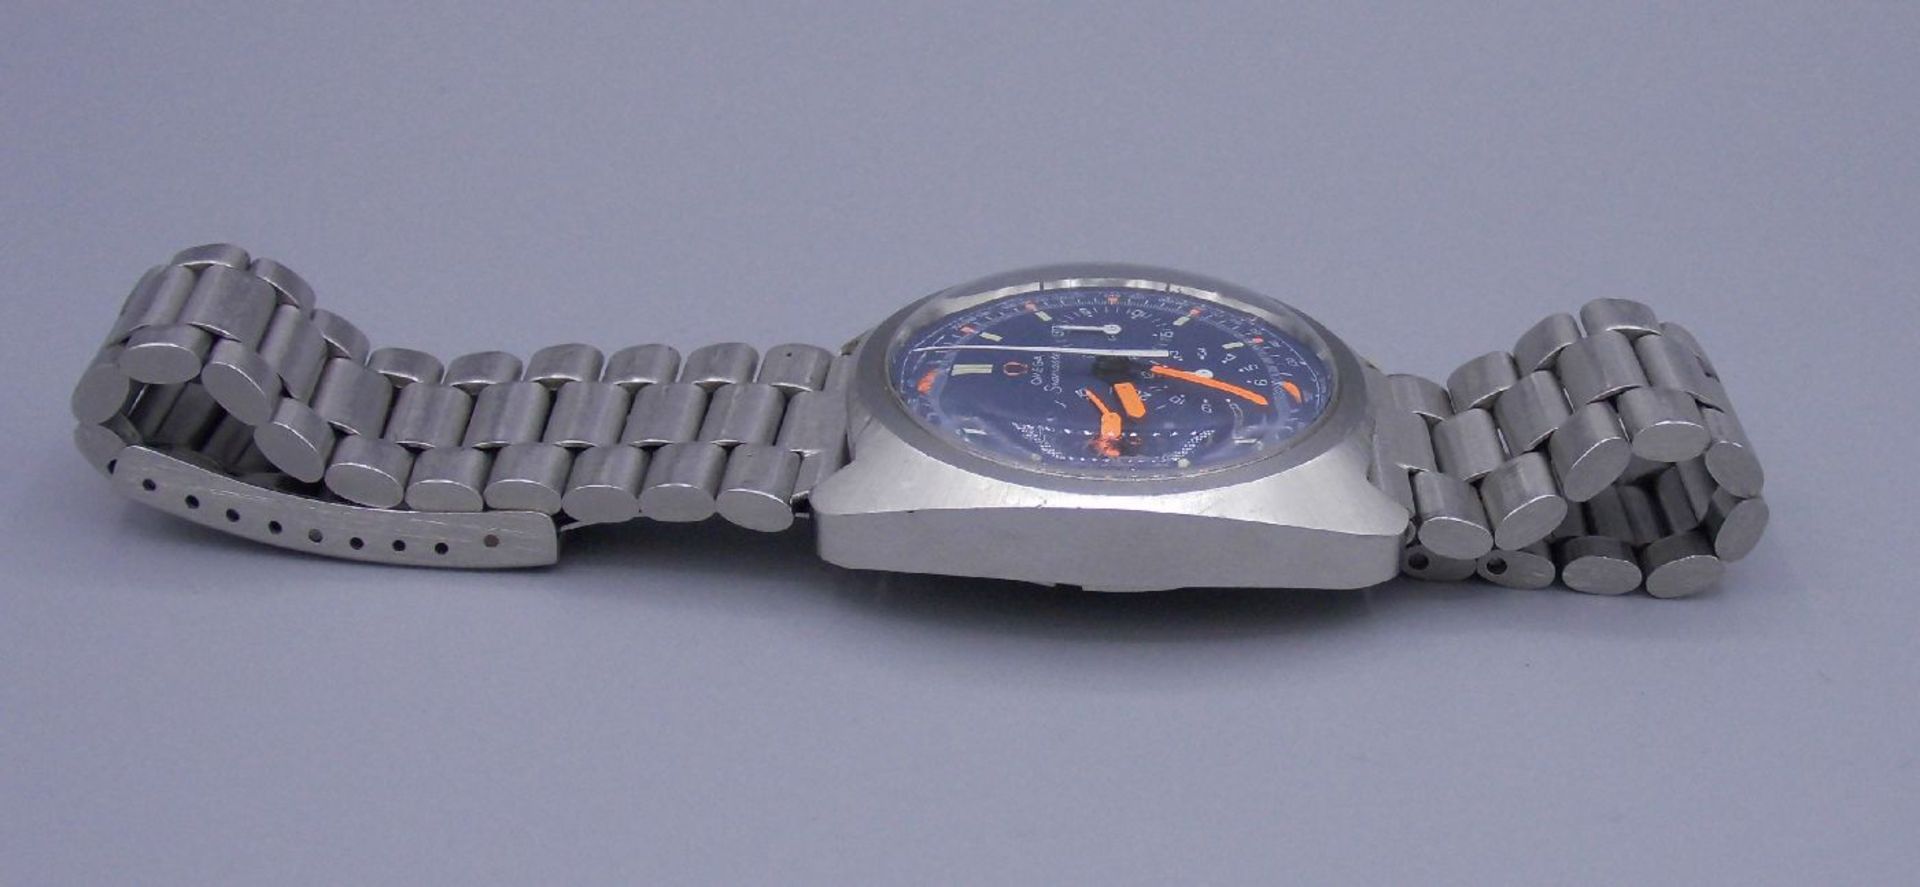 VINTAGE ARMBANDUHR / CHRONOGRAPH - Omega Seamaster / wristwatch, Handaufzug, 1970er Jahre, - Bild 5 aus 11